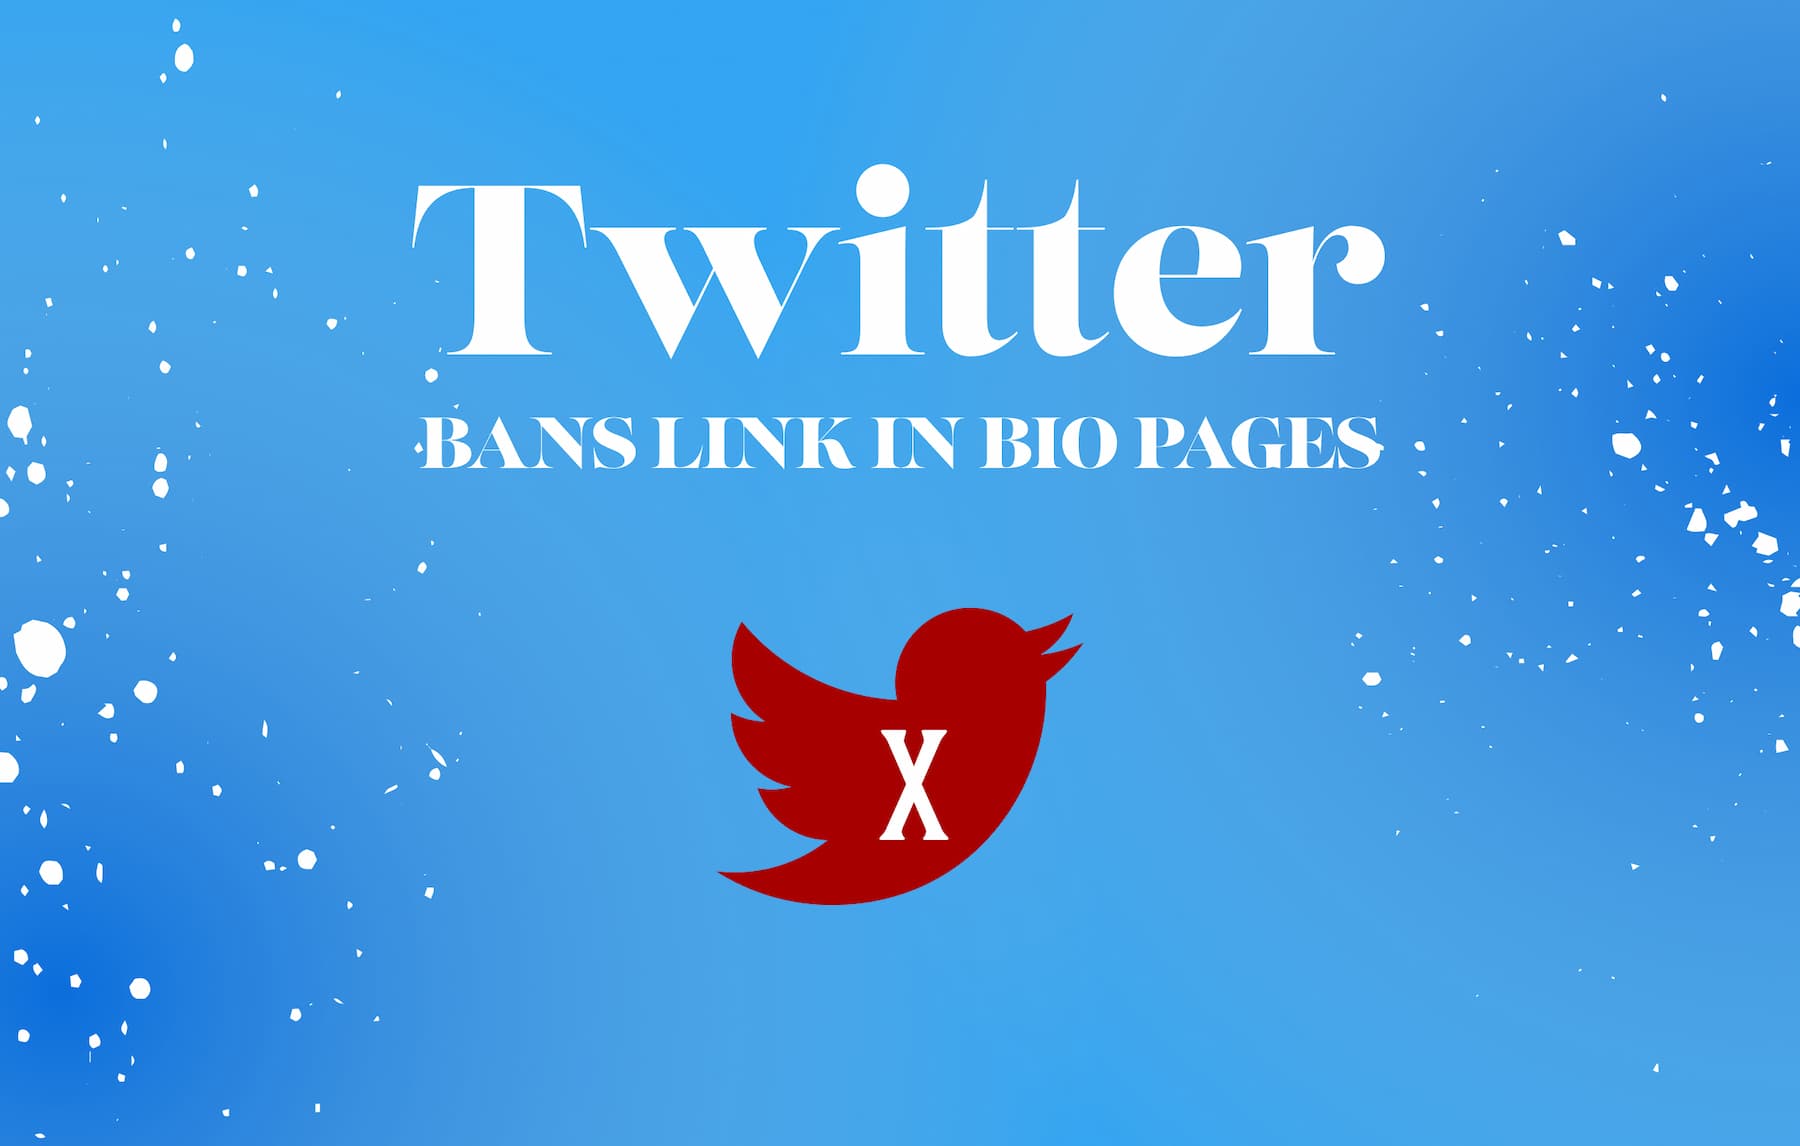 Twitter bans link in bio